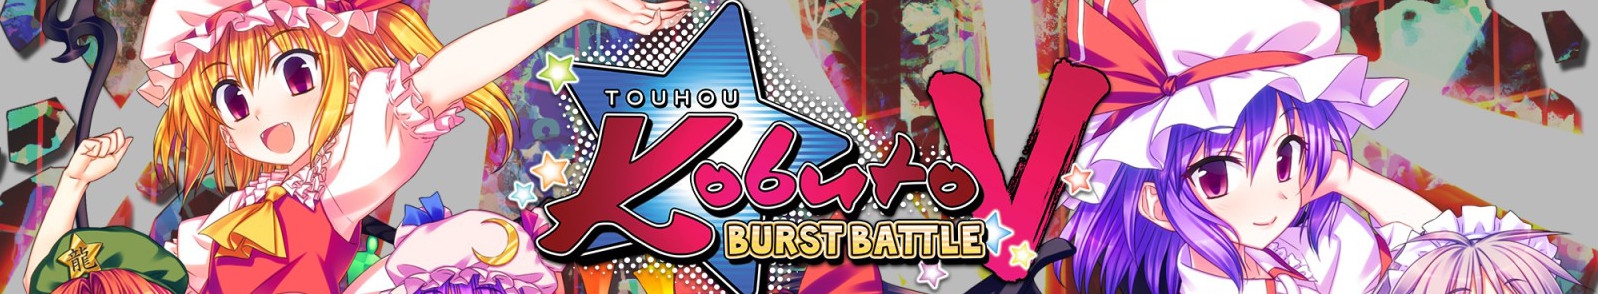 Banner Touhou Kobuto V Burst Battle